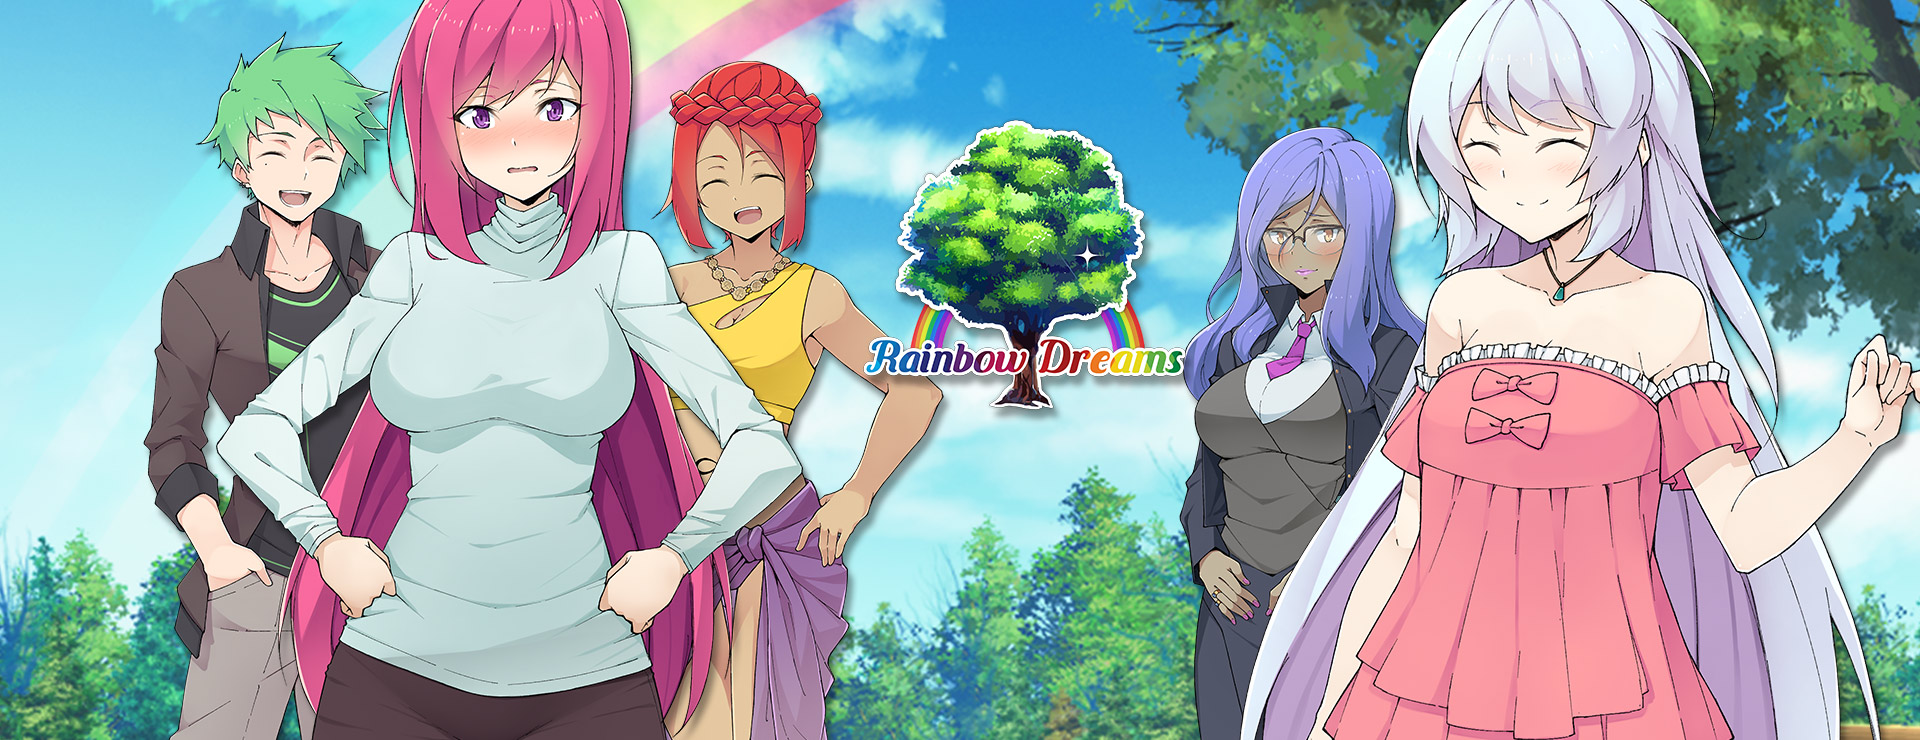 Rainbow Dreams - Novela Visual Juego